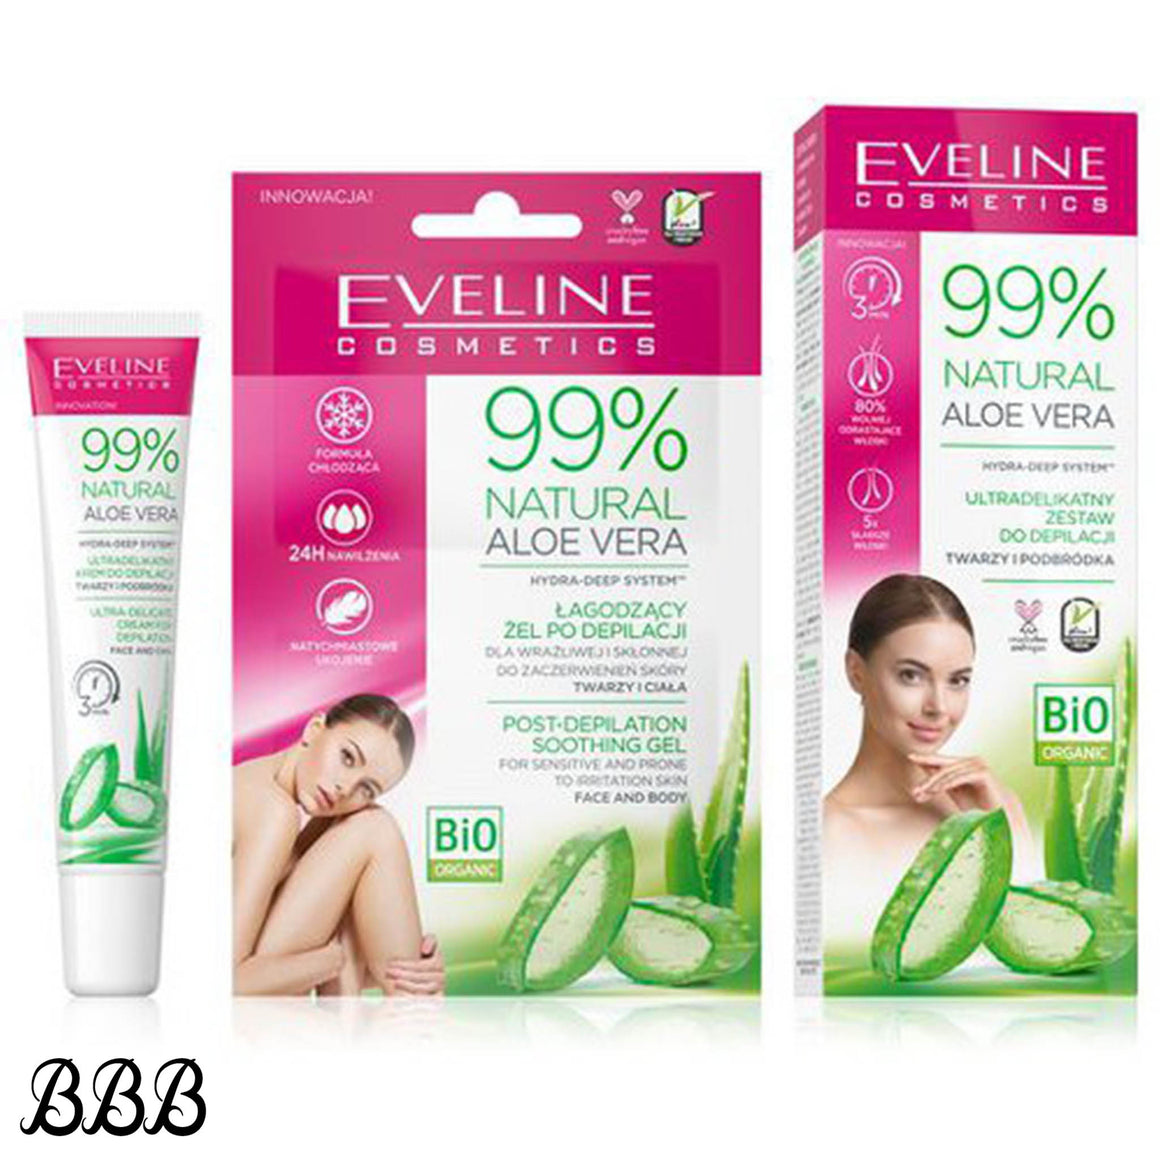 EVELINE Bio Organic 99% Natural Aloe Vera Ultra-Delicate Set For Depilation